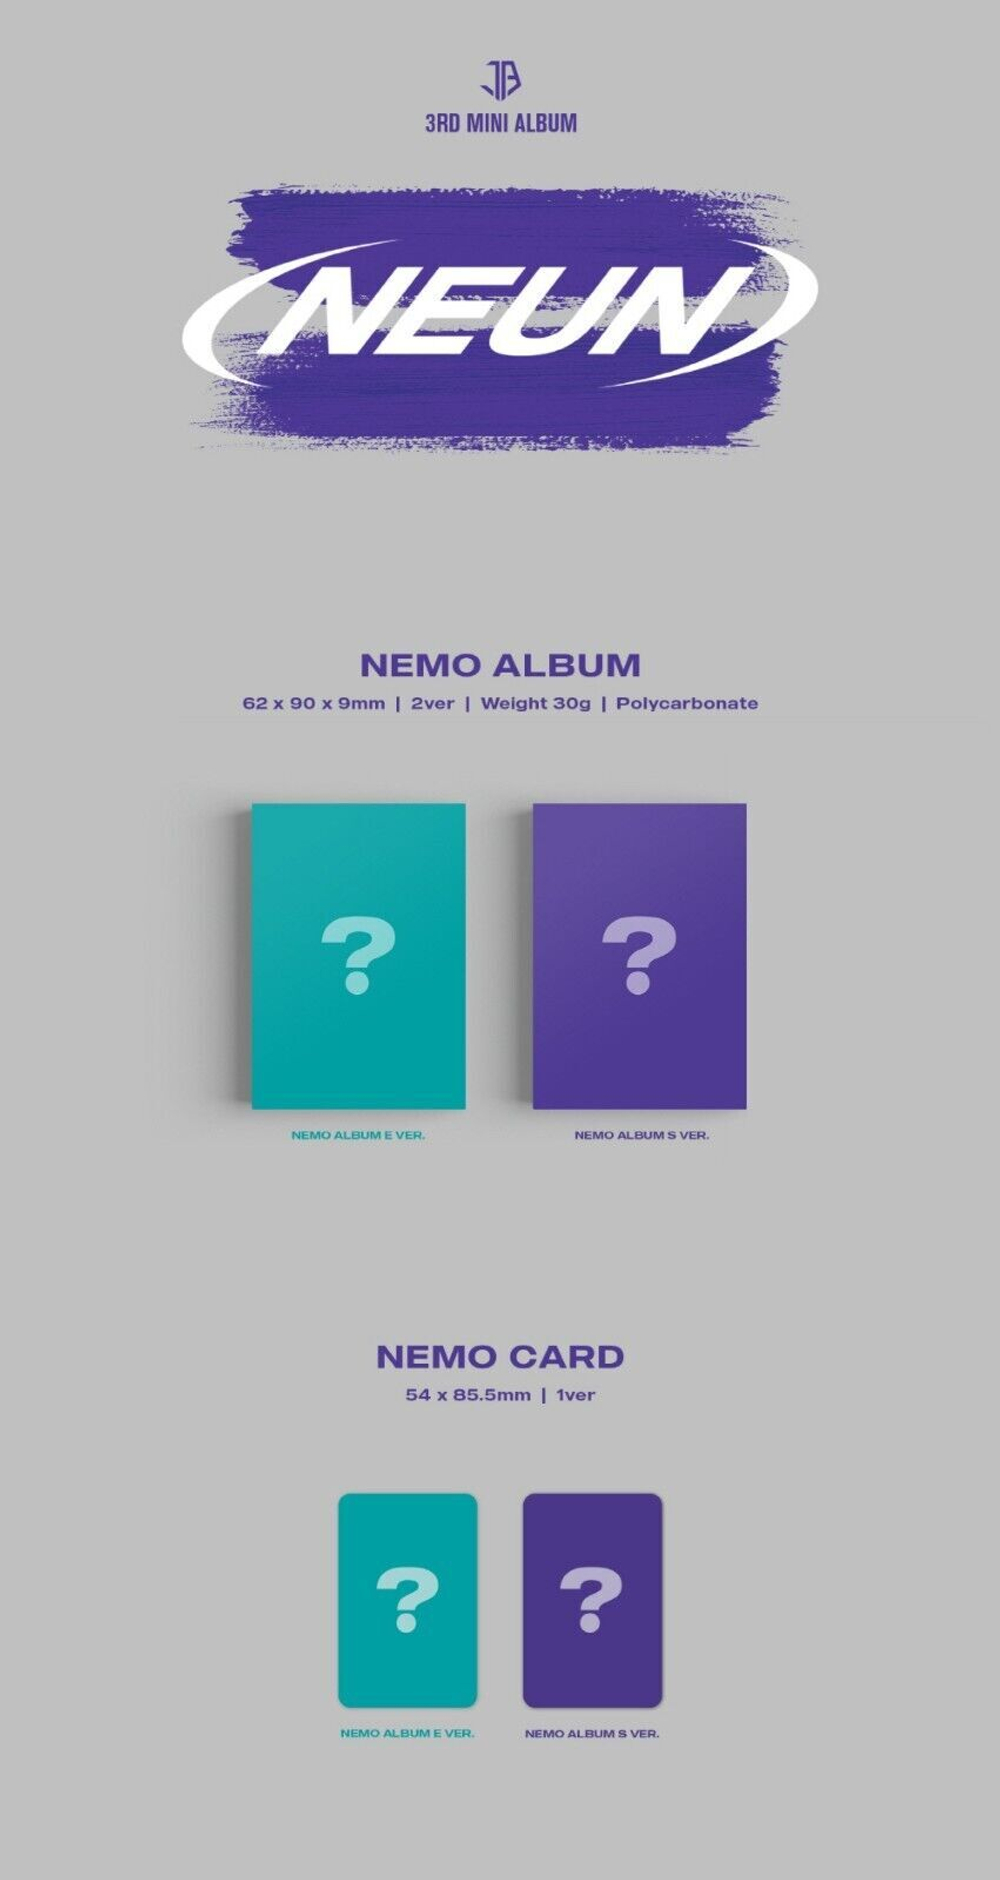 JUST B - NEUN (Nemo Album)